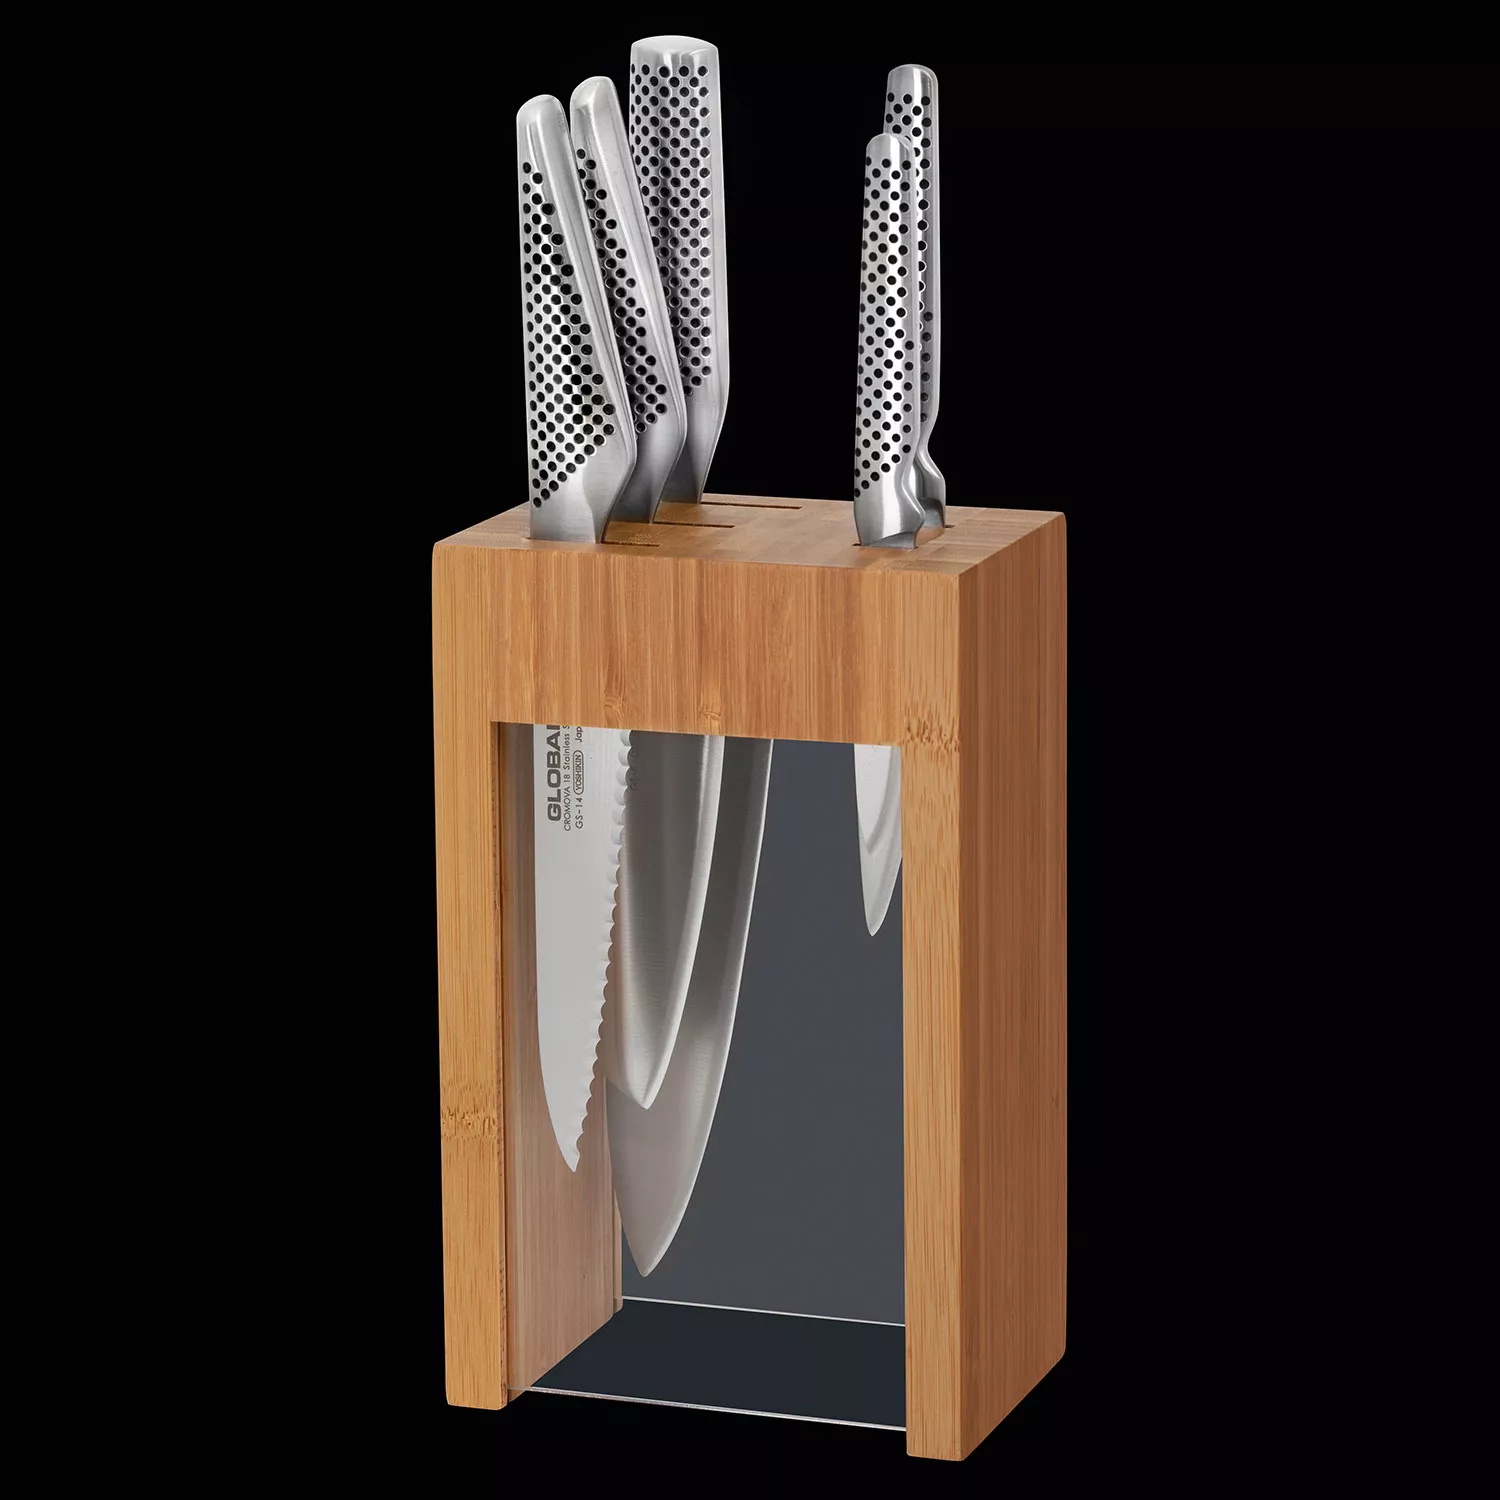 Global 7-Piece Ikasu Knife Block Set